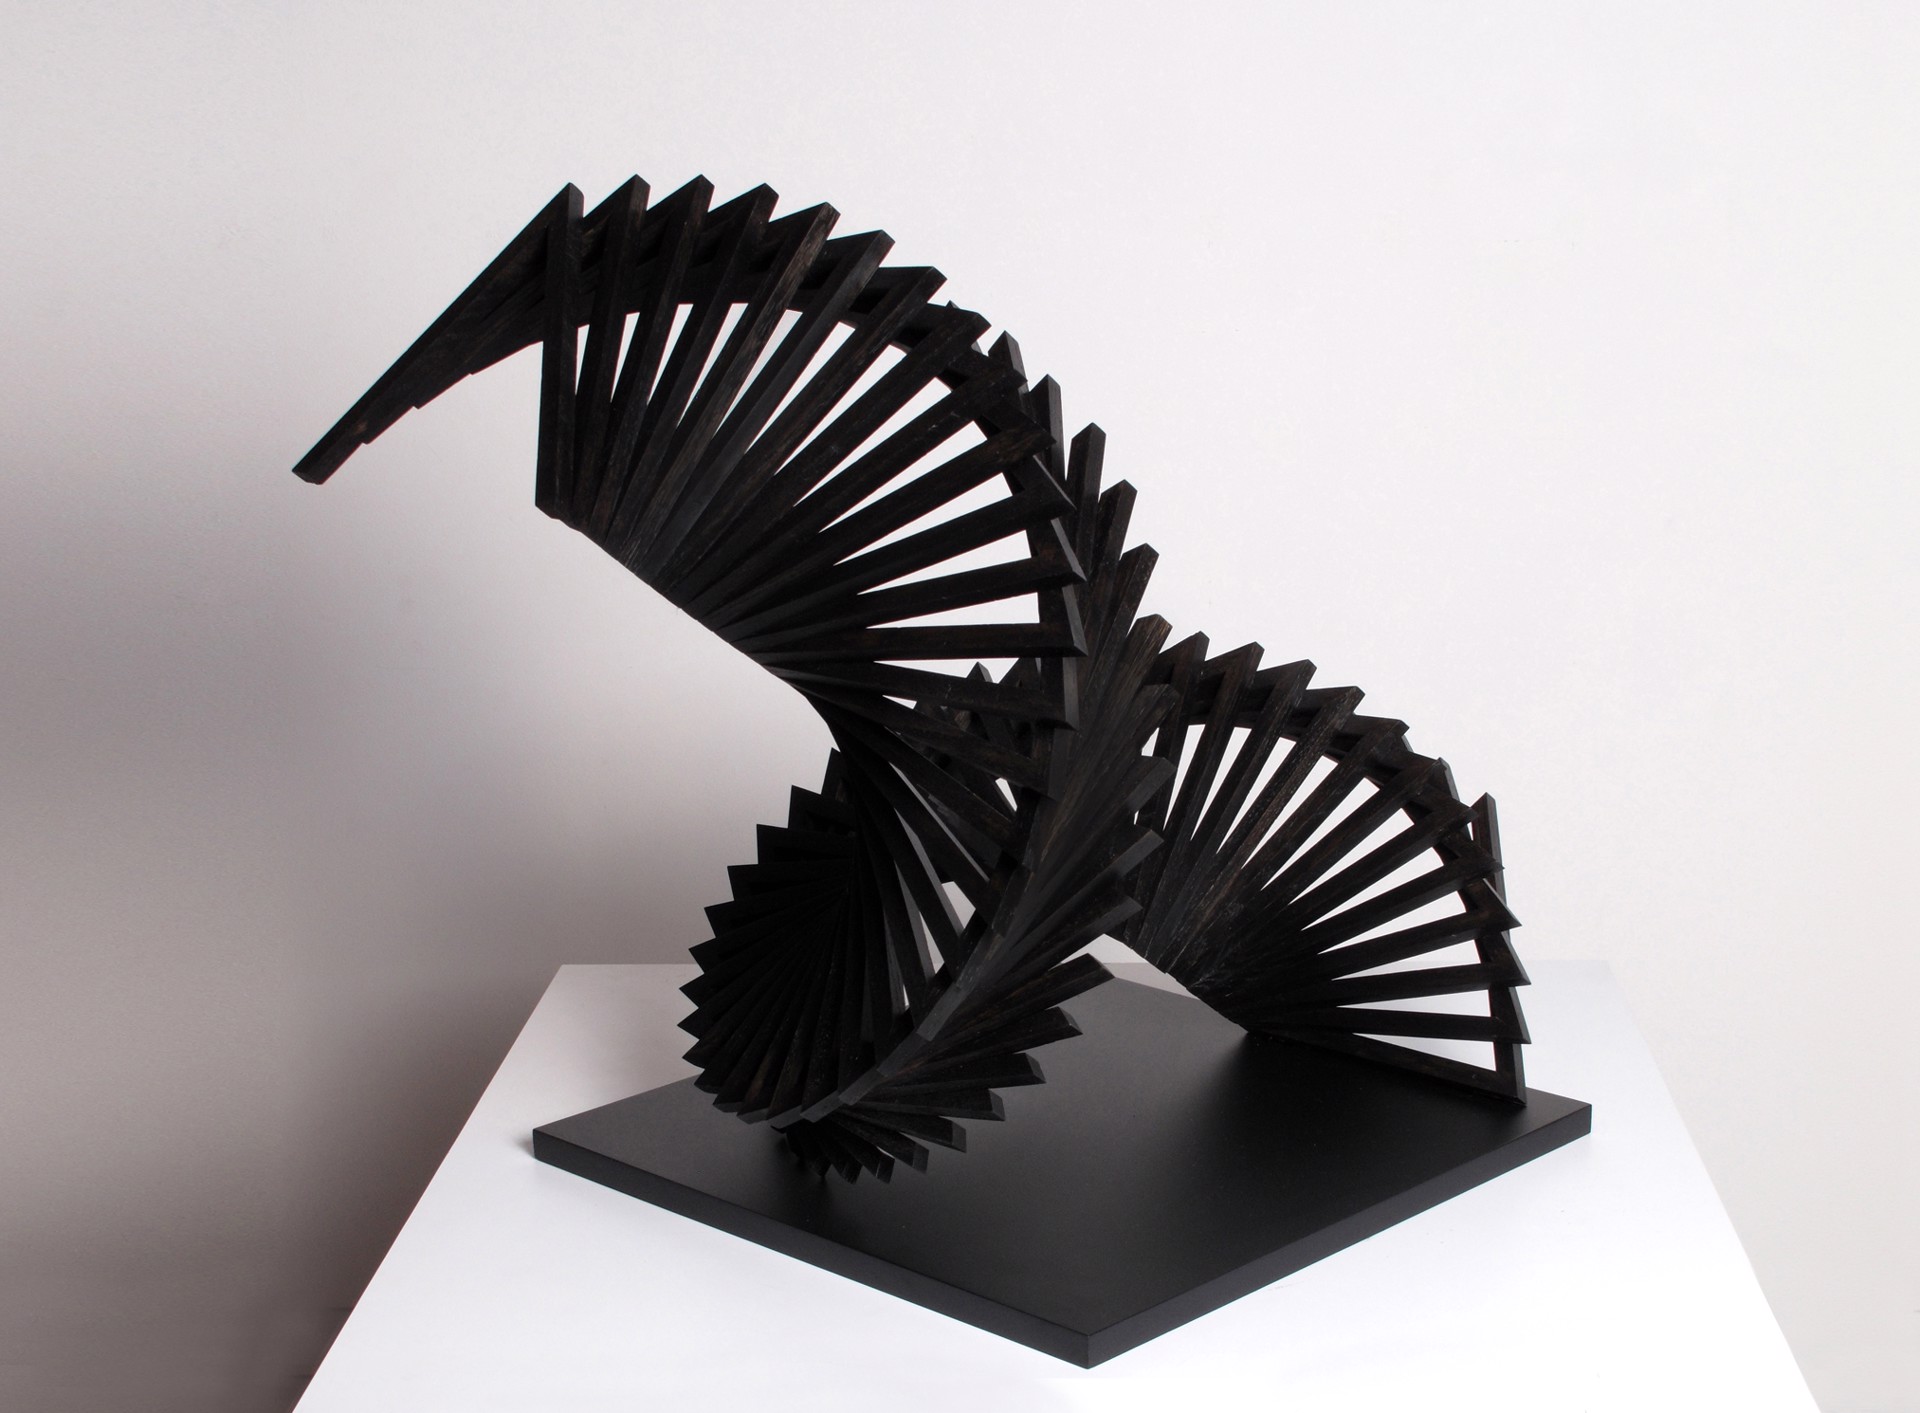 Untitled Black Spiral by Robert Winkler